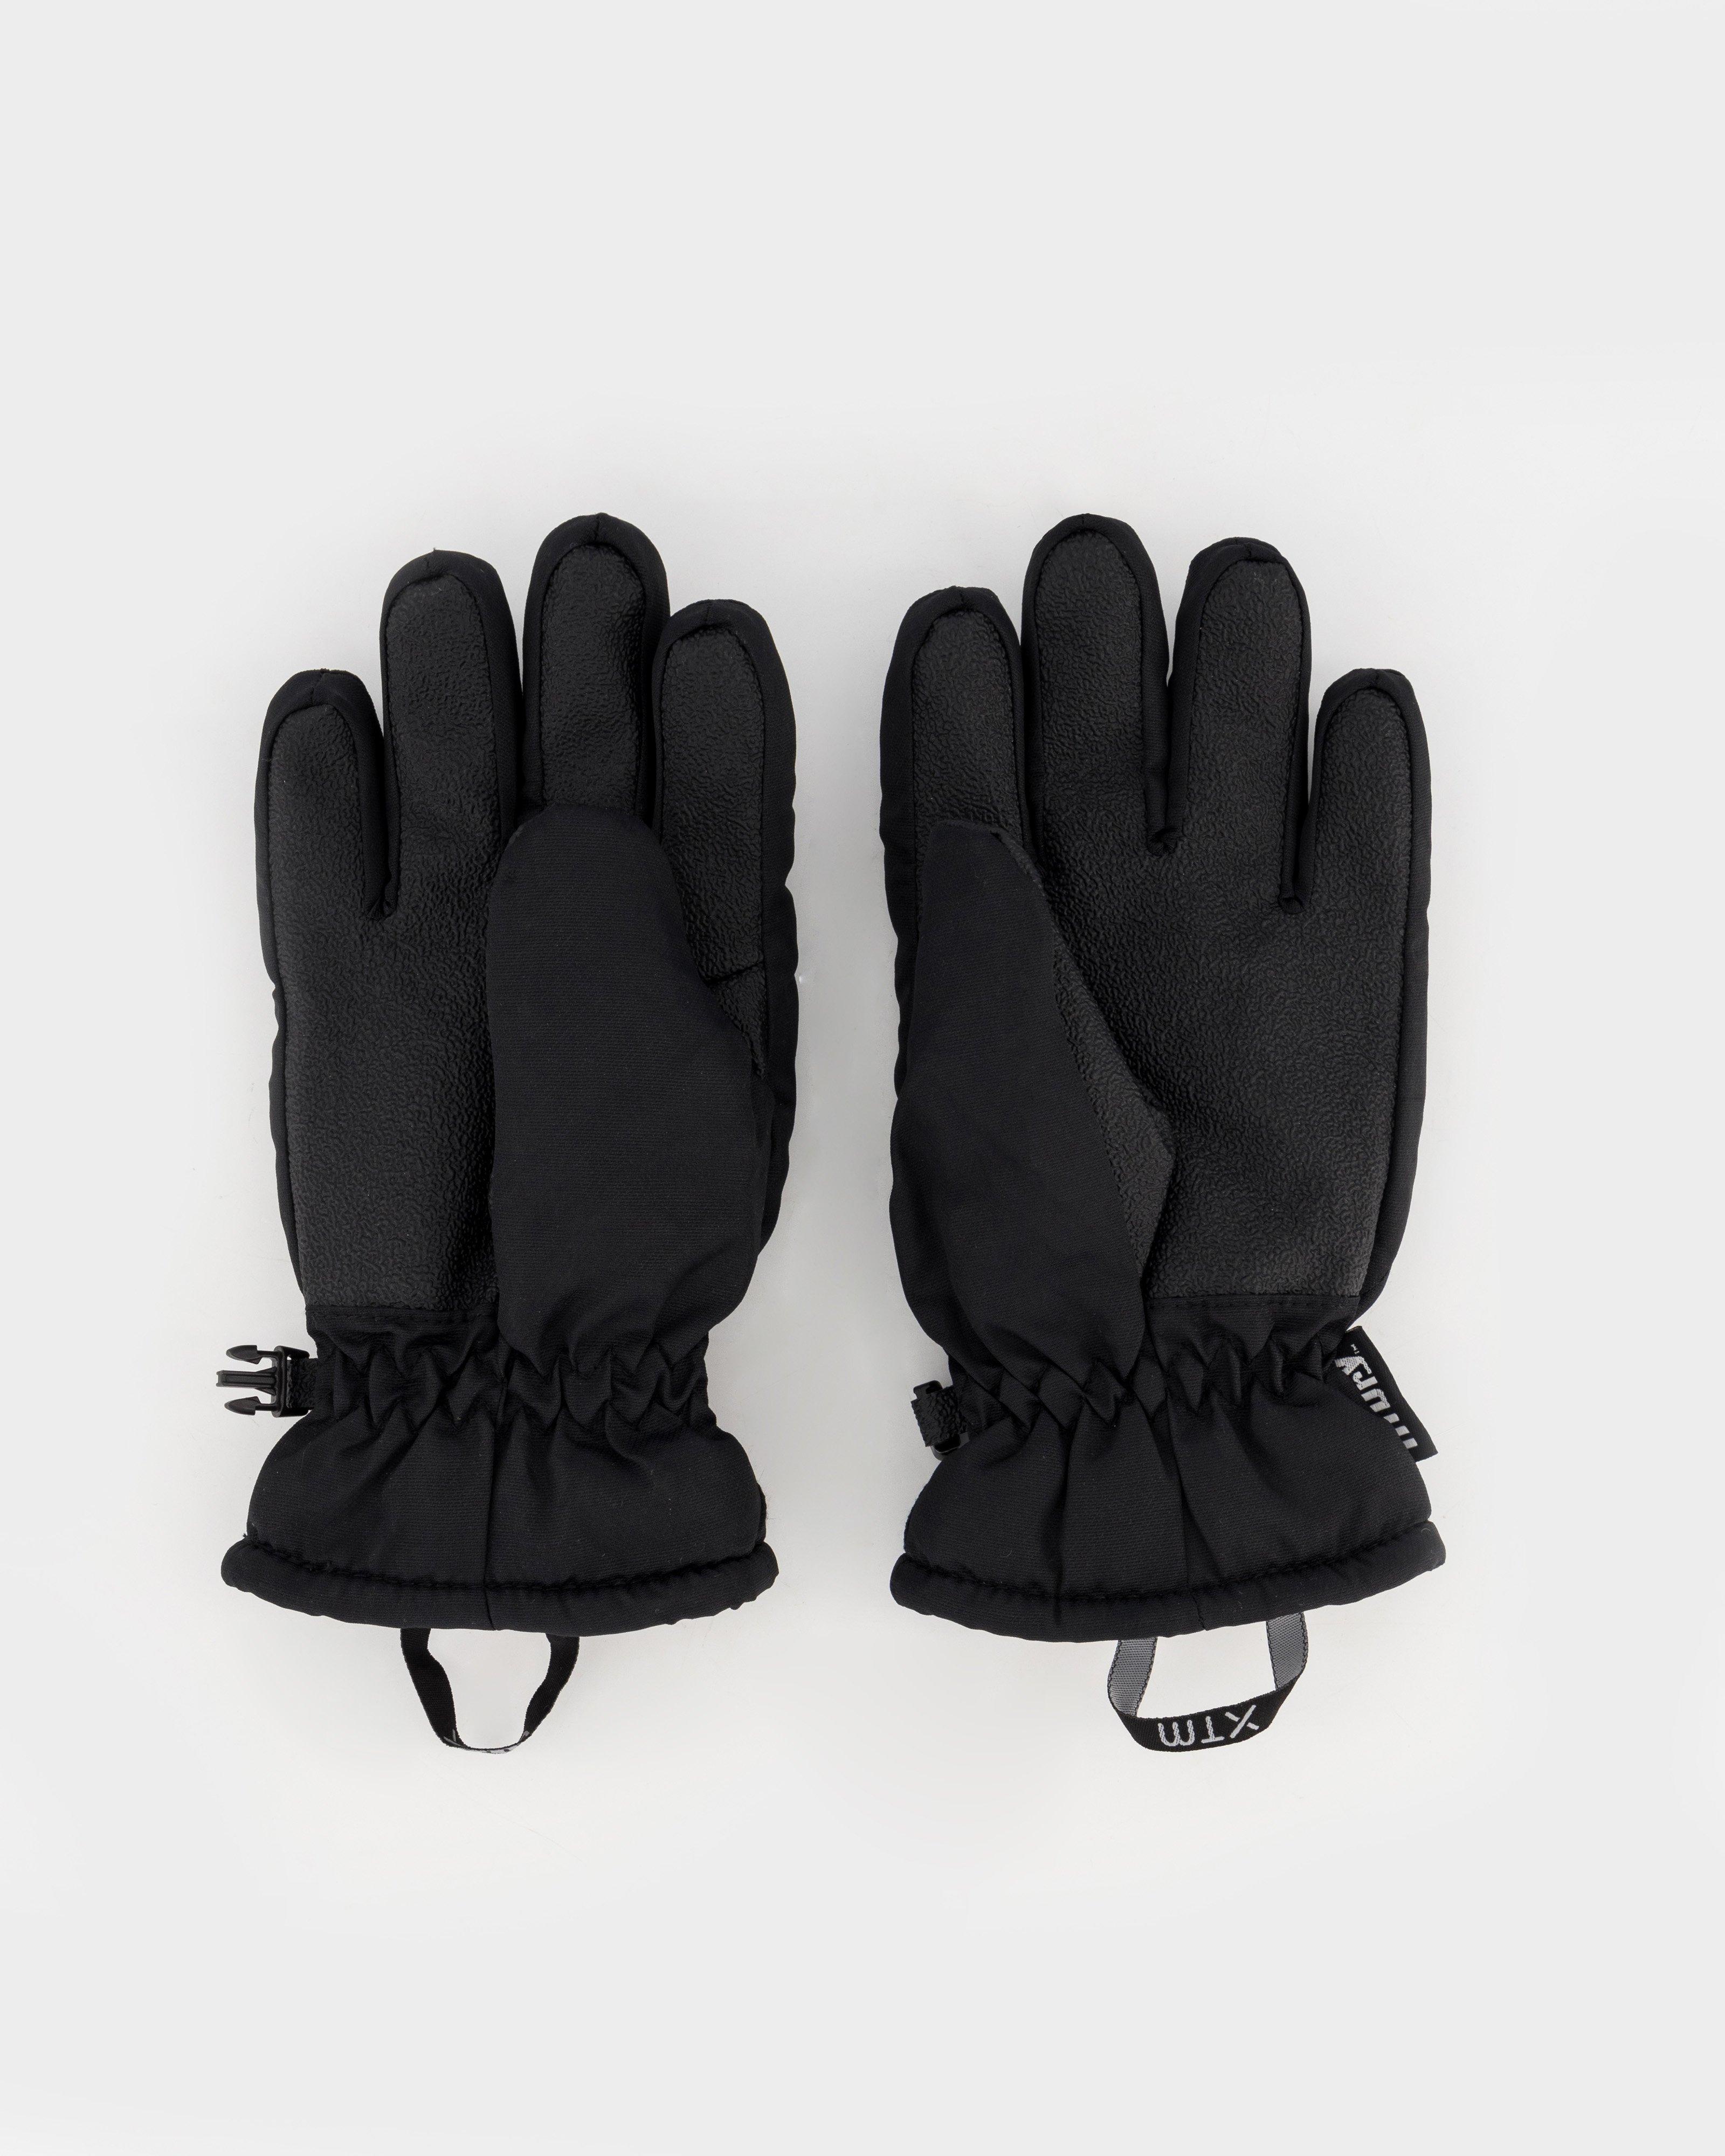 XTM Xpress II Gloves -  Black